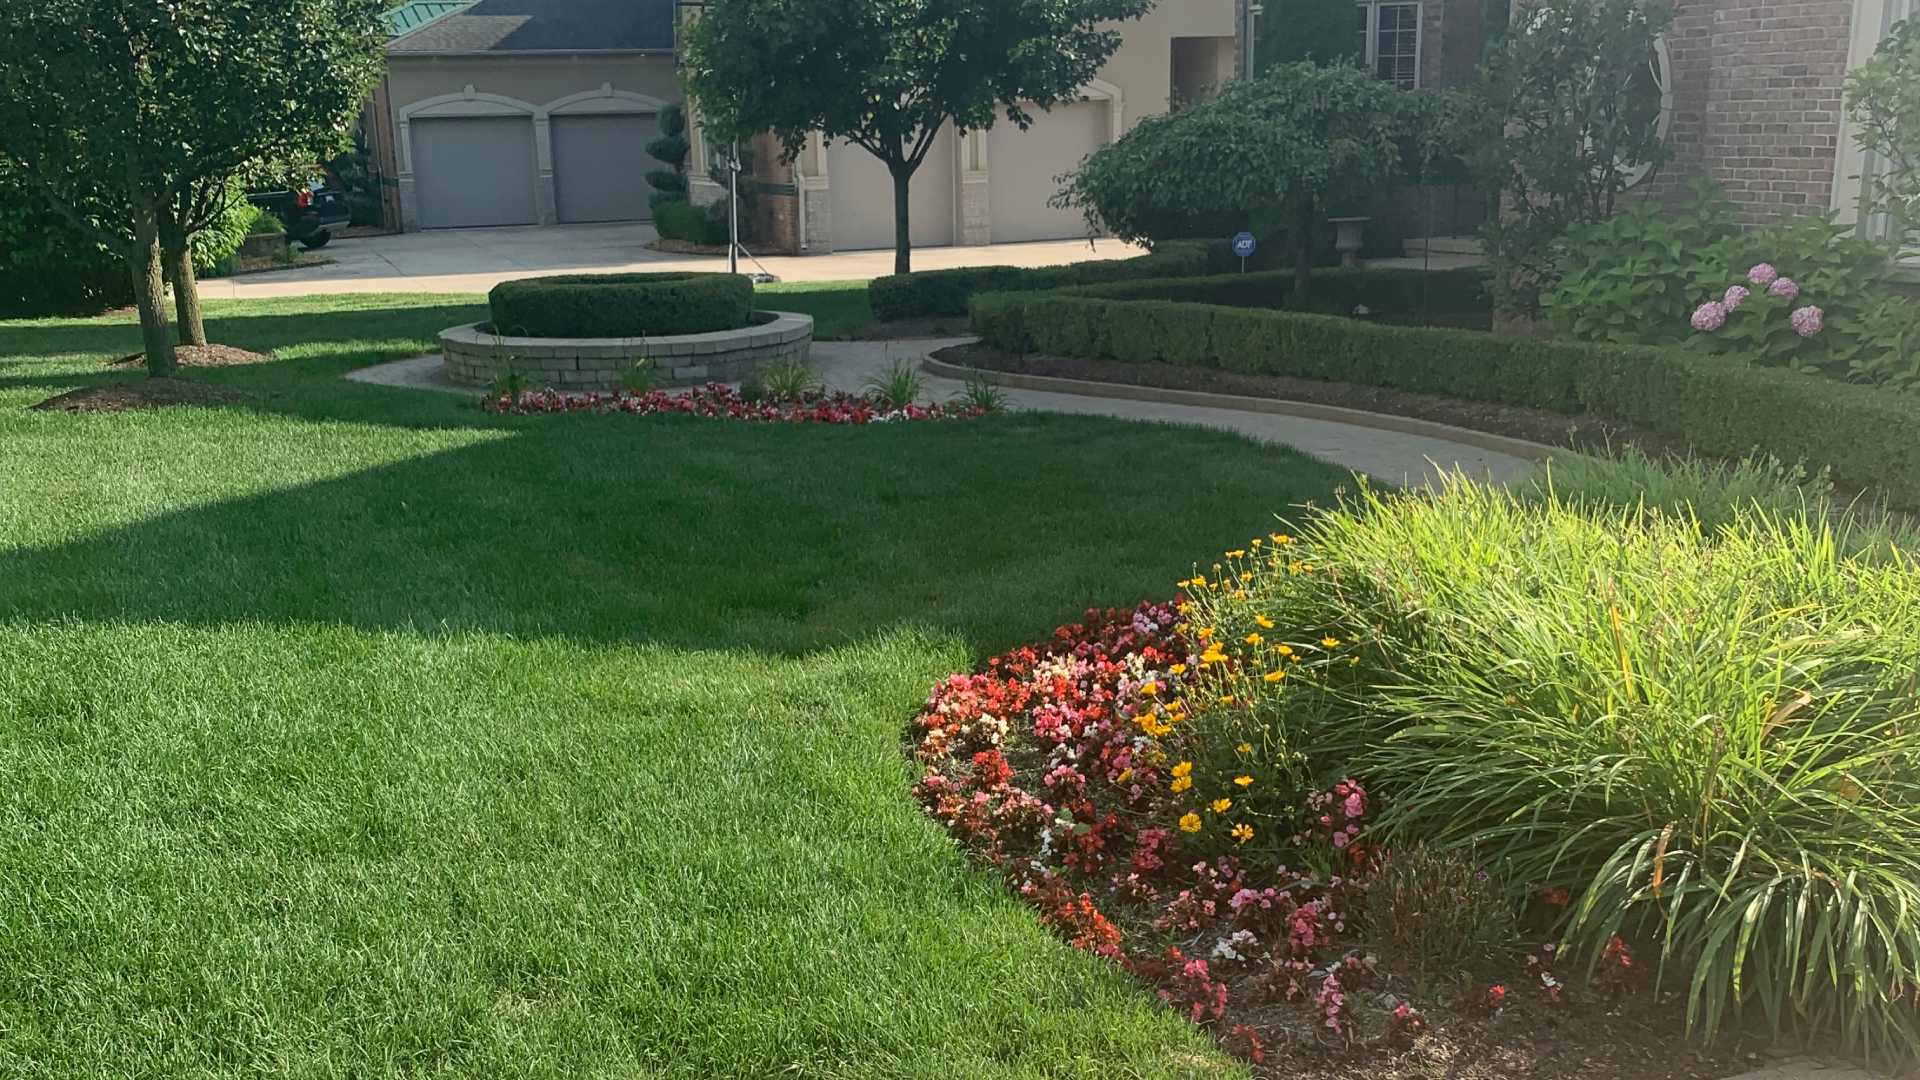 Landscape bed plantings in front of home un Utica, MI.